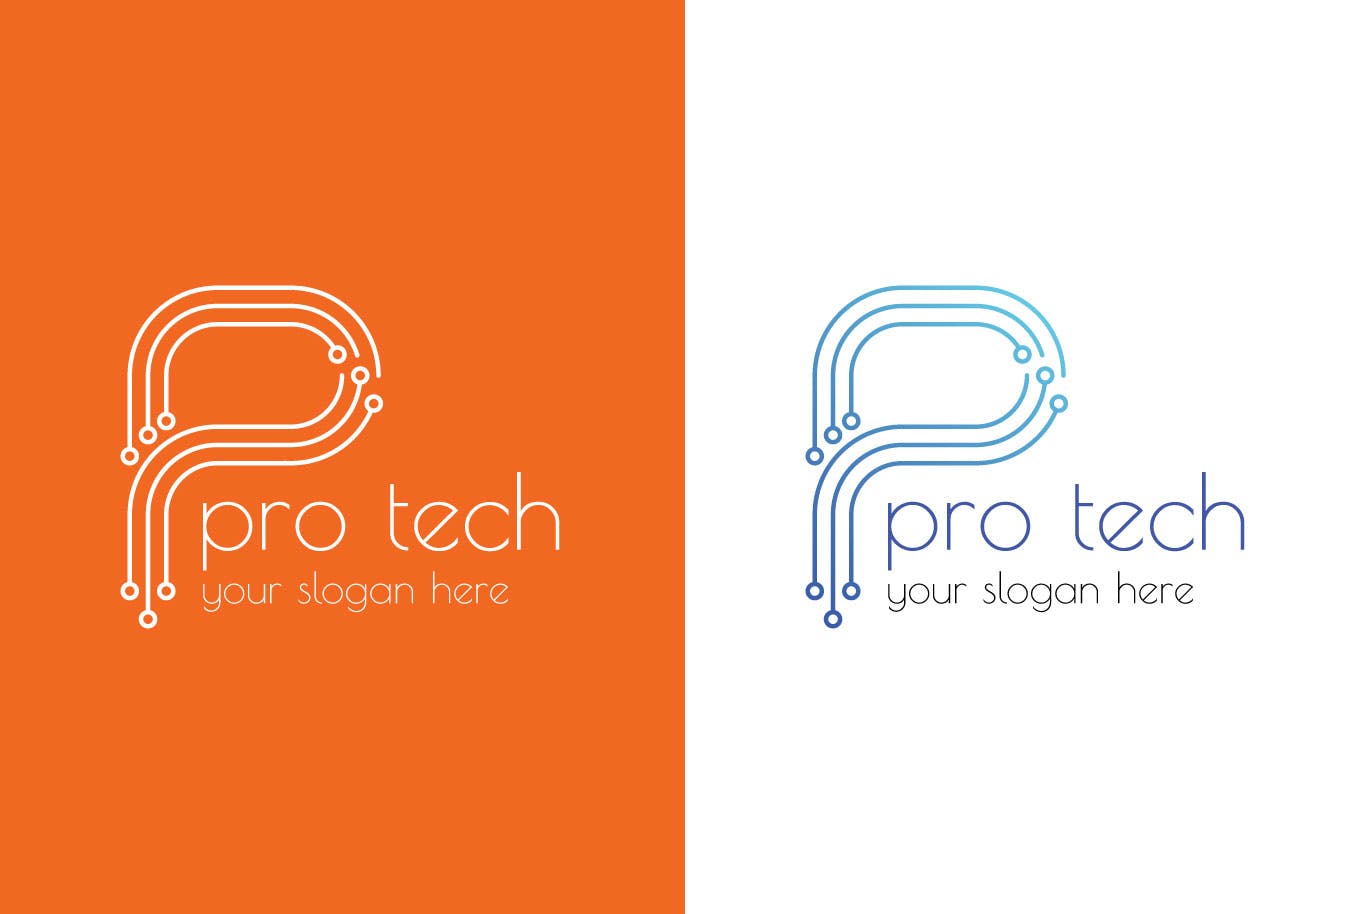 字母P创意图形企业Logo设计第一素材精选模板 Letter Based Business Logo Template插图(1)